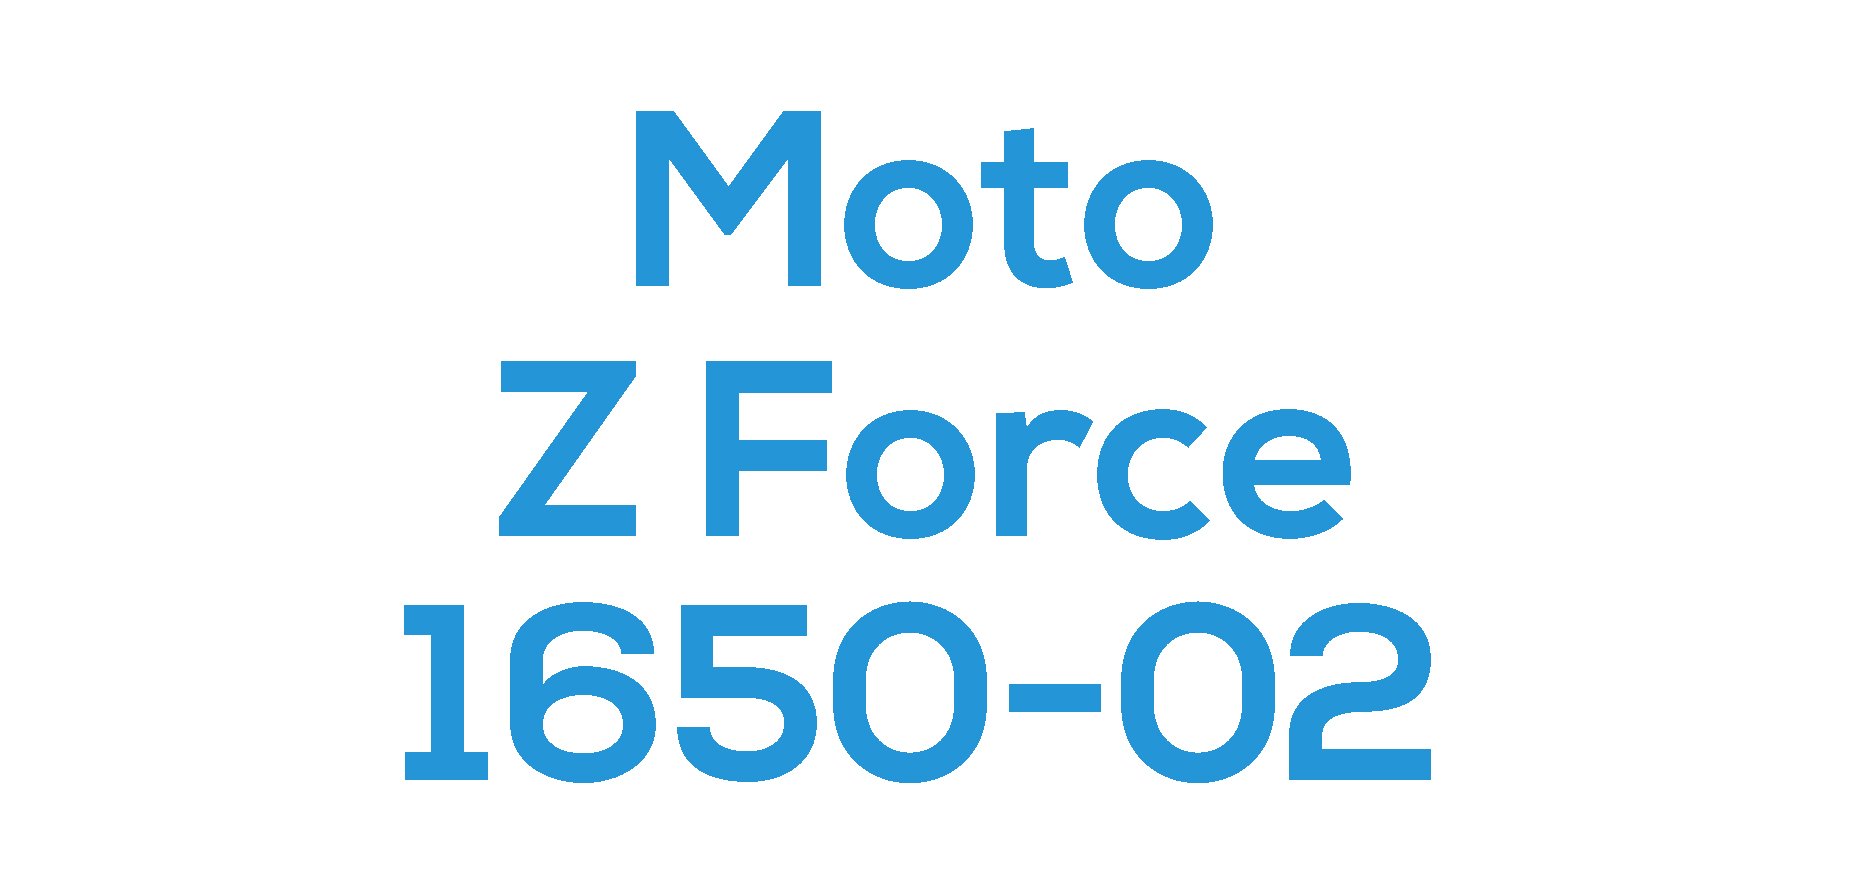 Z Force 2016 (XT1650-02)